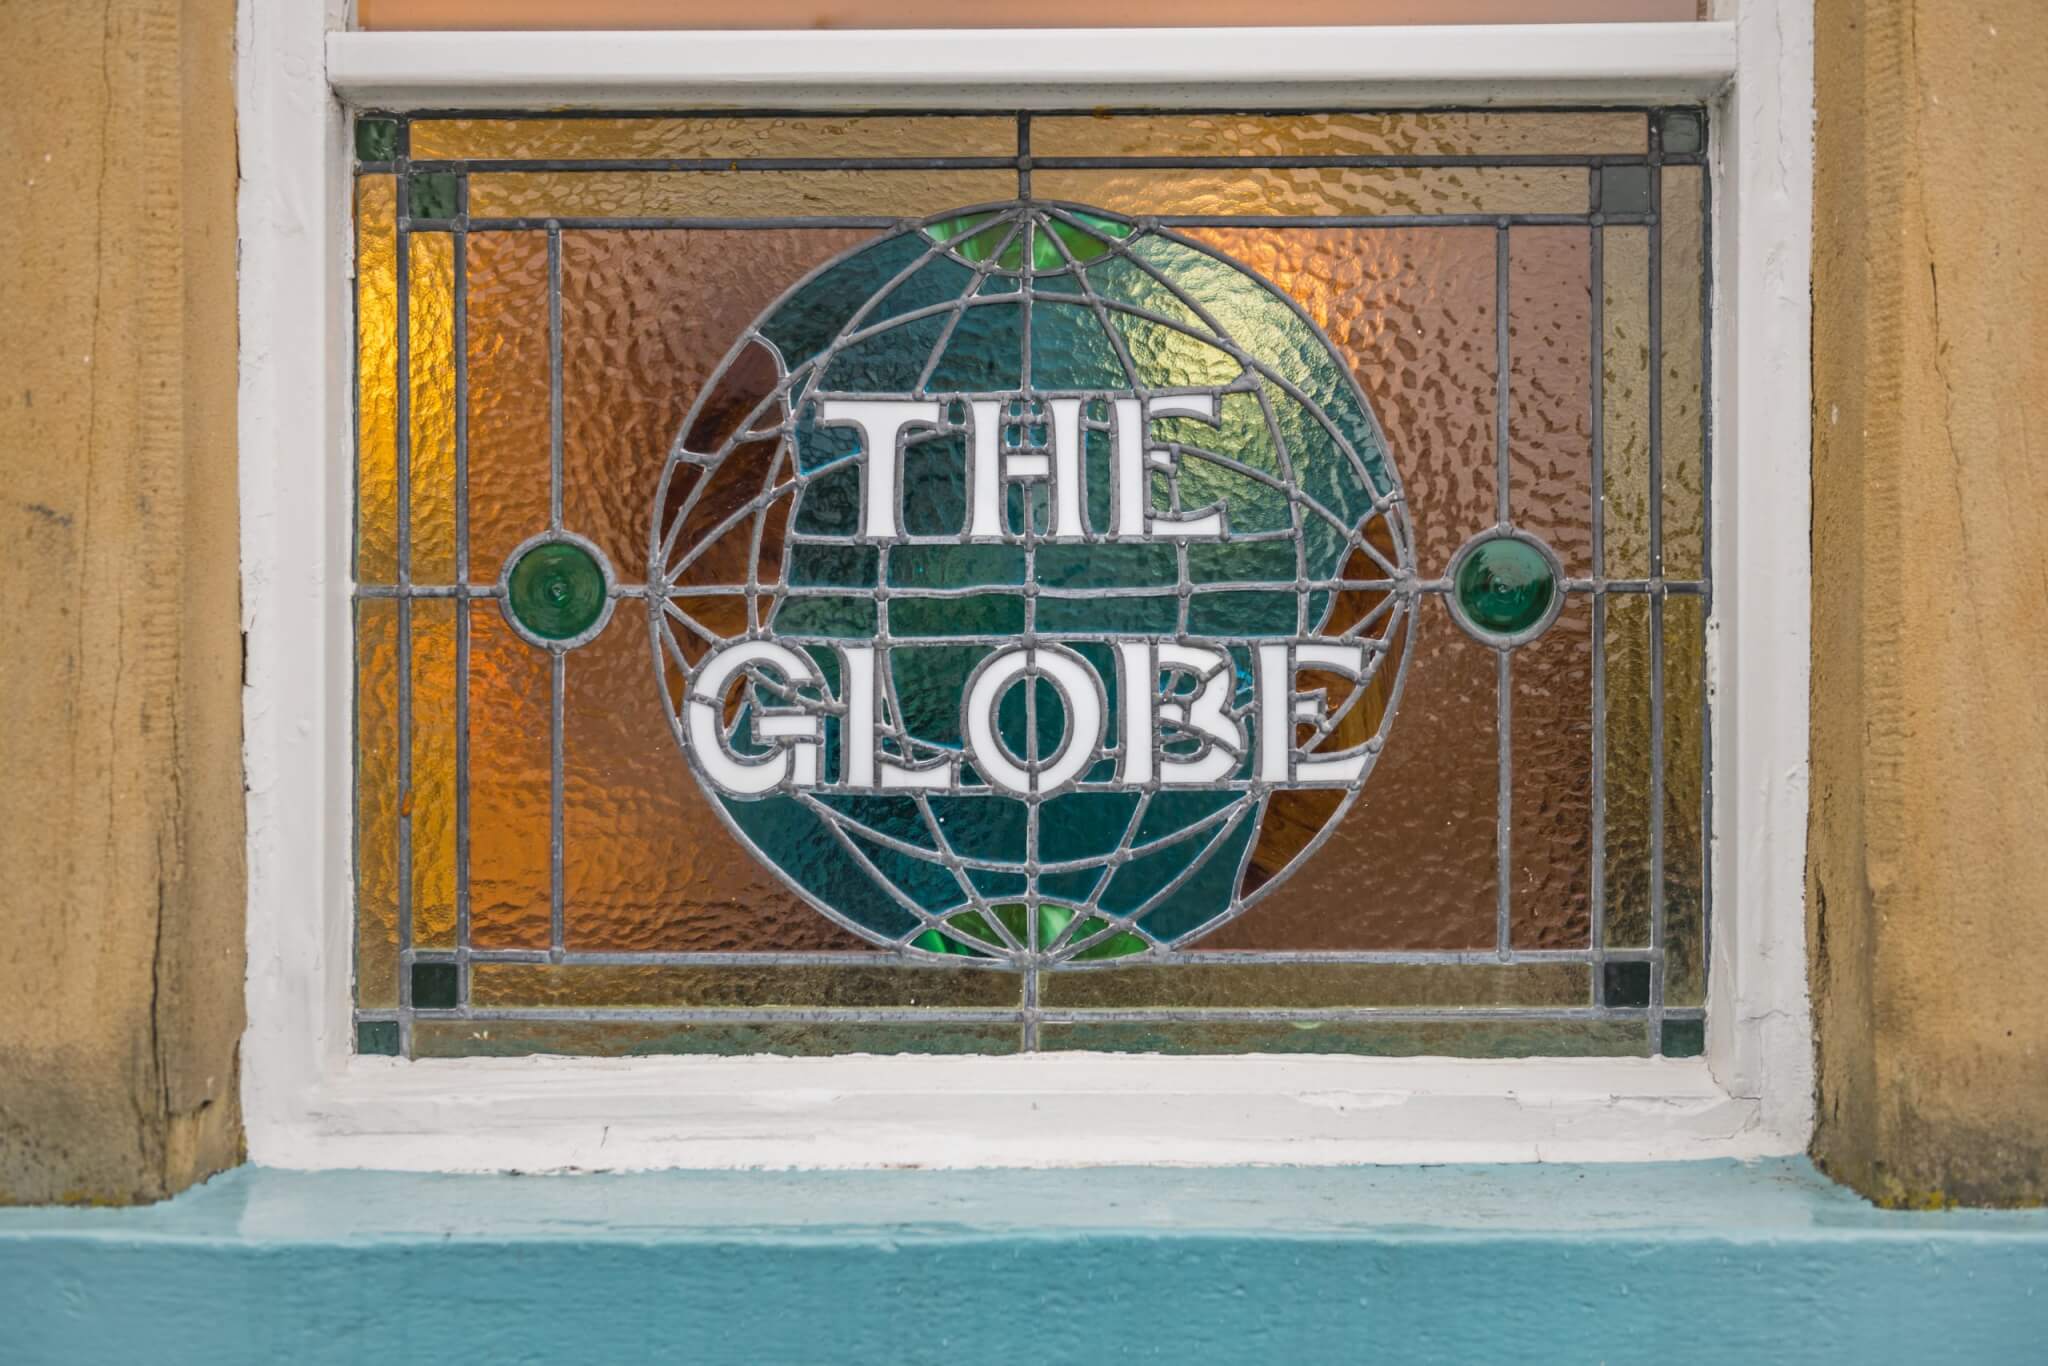 The globe window